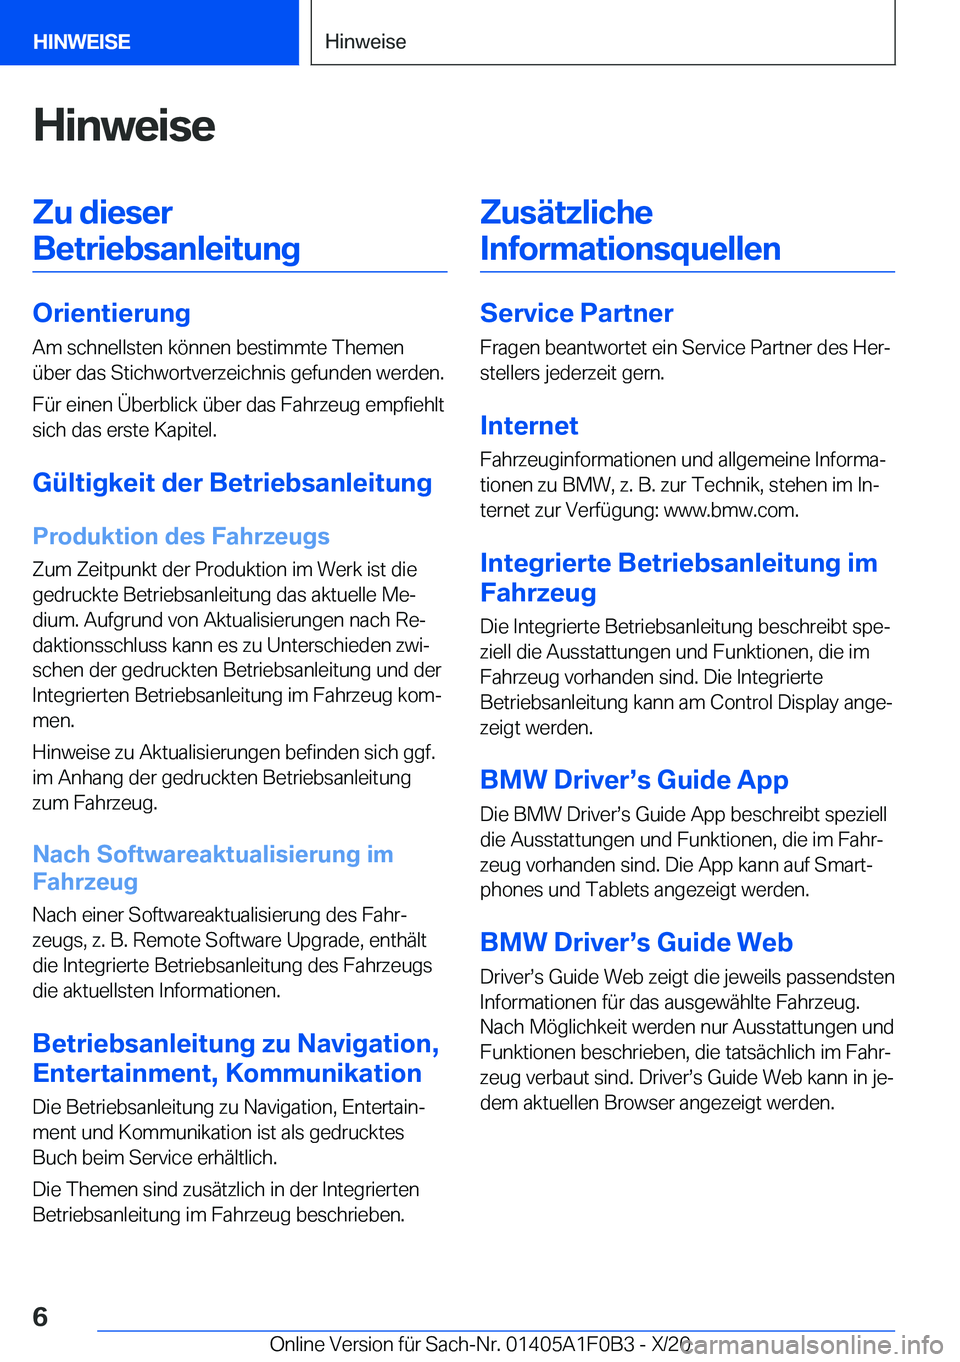 BMW X6 2021  Betriebsanleitungen (in German) �H�i�n�w�e�i�s�e�Z�u��d�i�e�s�e�r�B�e�t�r�i�e�b�s�a�n�l�e�i�t�u�n�g
�O�r�i�e�n�t�i�e�r�u�n�g �A�m��s�c�h�n�e�l�l�s�t�e�n��k�